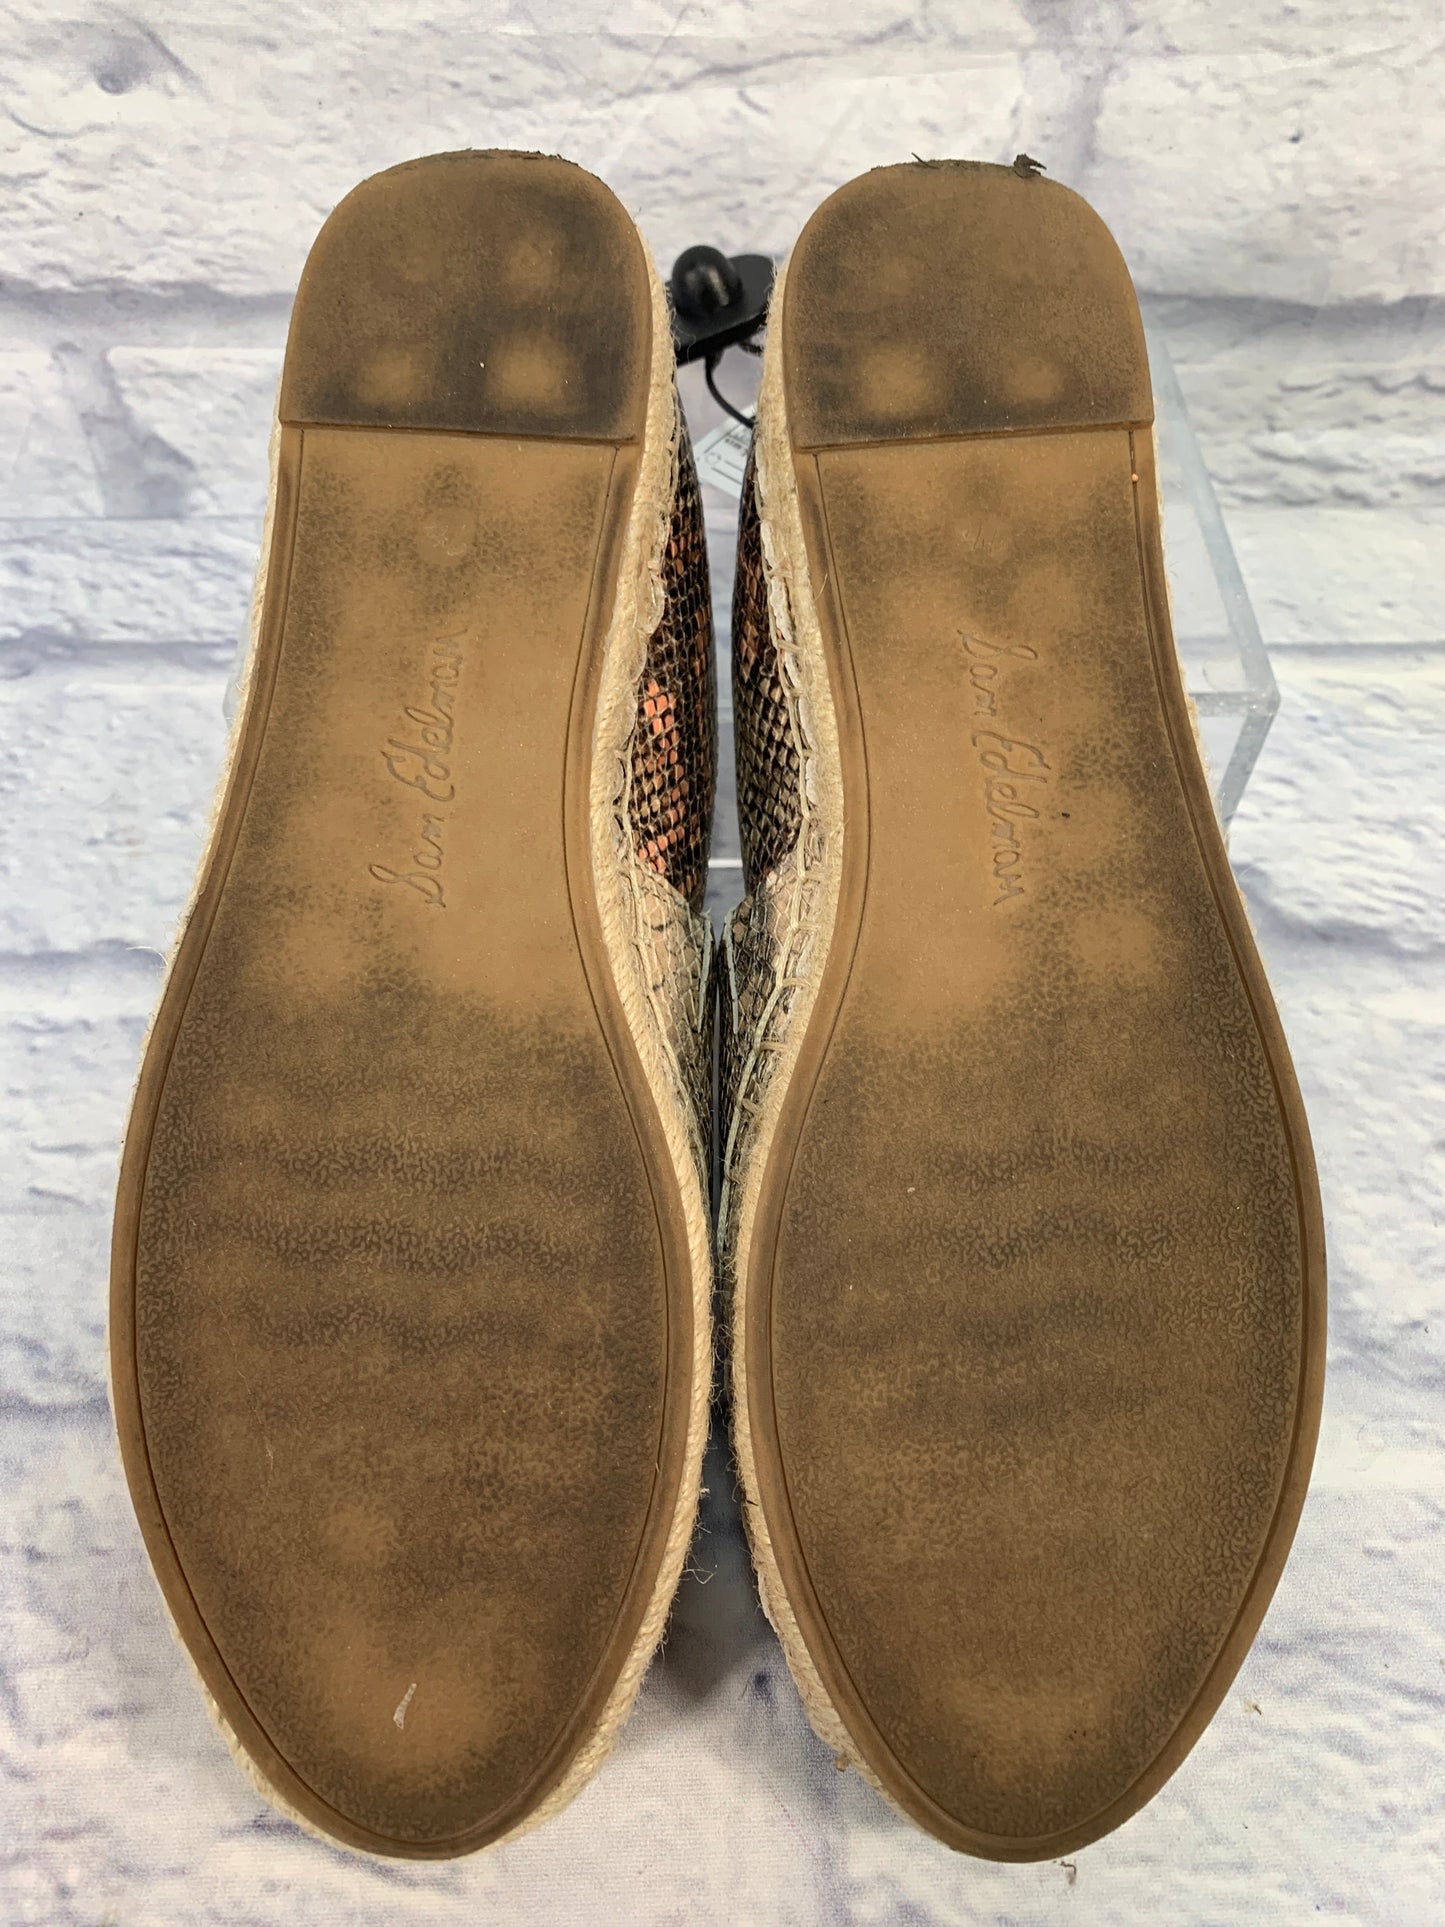 Shoes Flats Espadrille By Sam Edelman  Size: 7.5